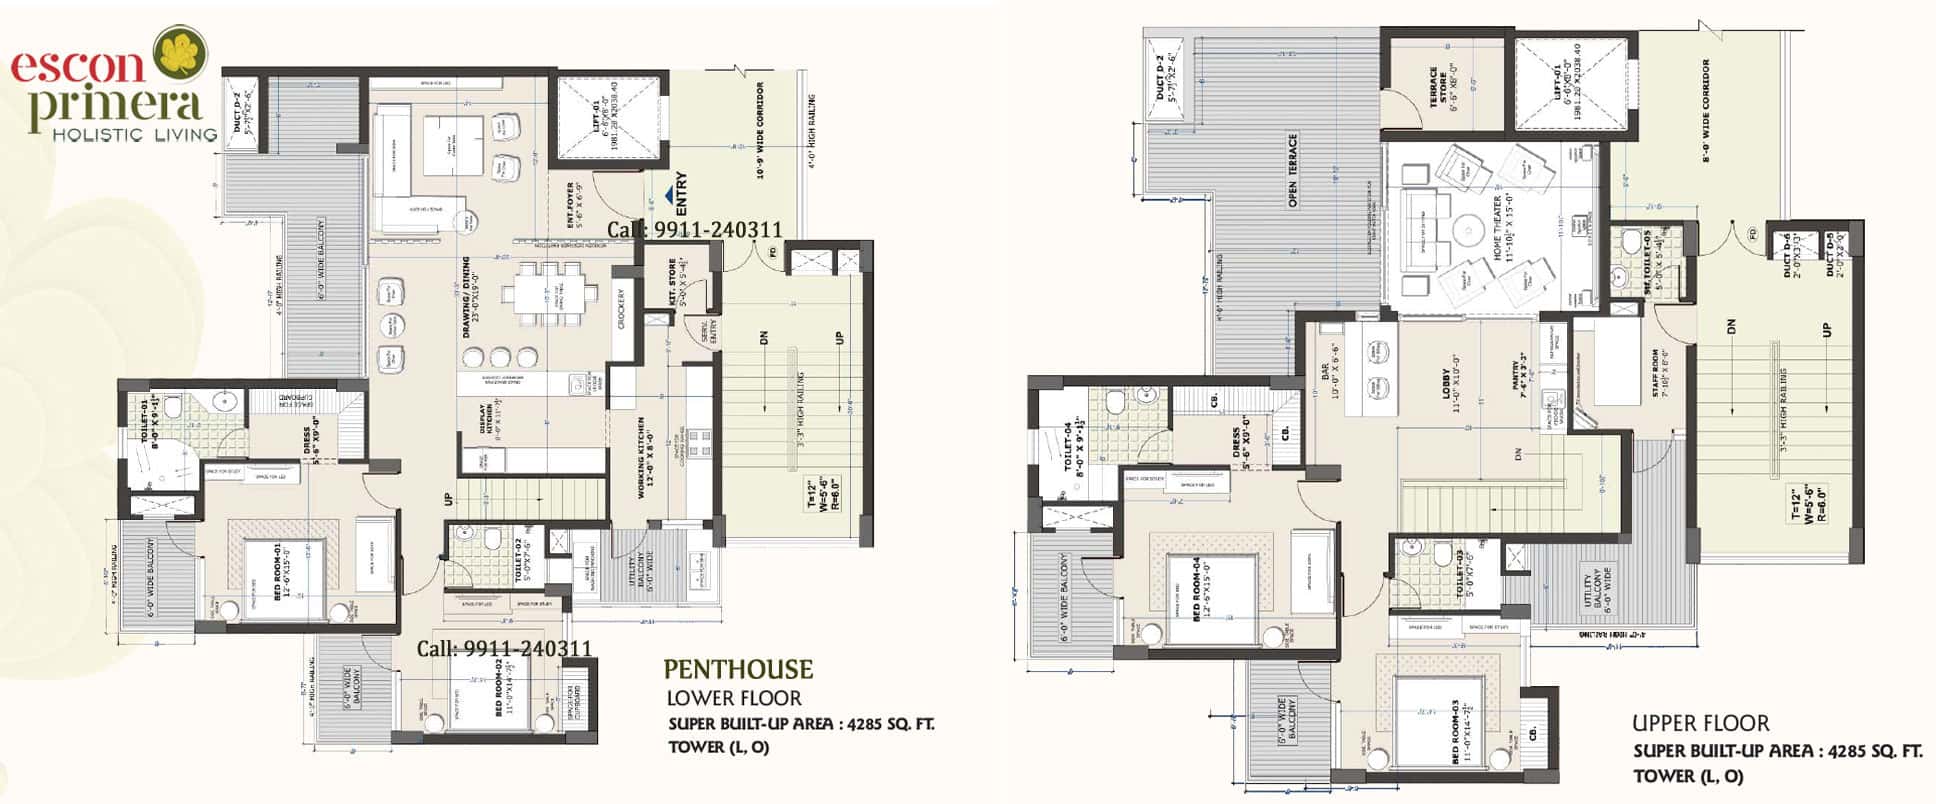 Escon Primera Penthouse, 4285 Sq.FT